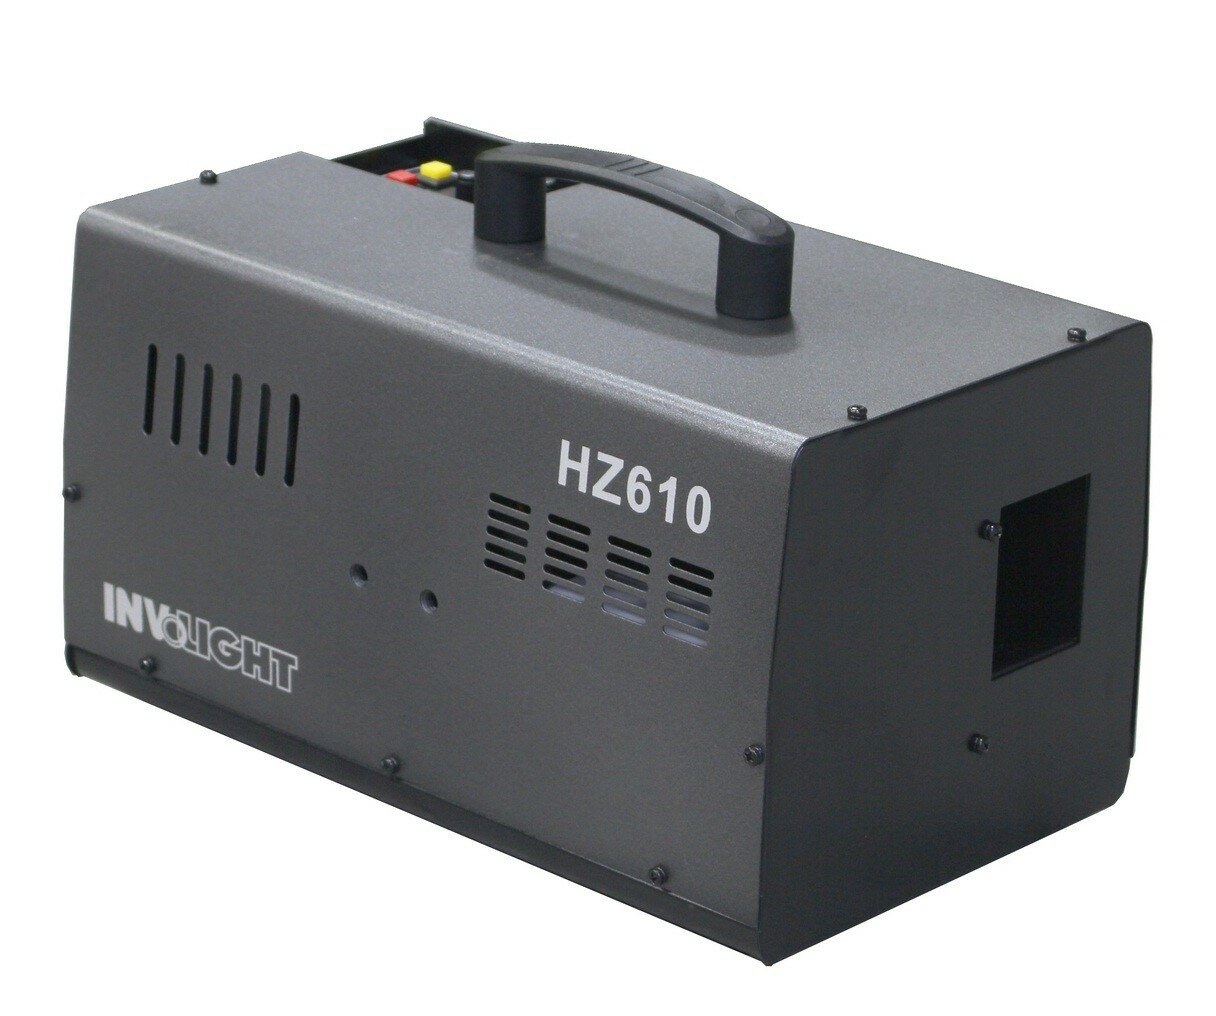 Involight HZ610 генератор тумана (Hazer) 600 Вт, DMX-512